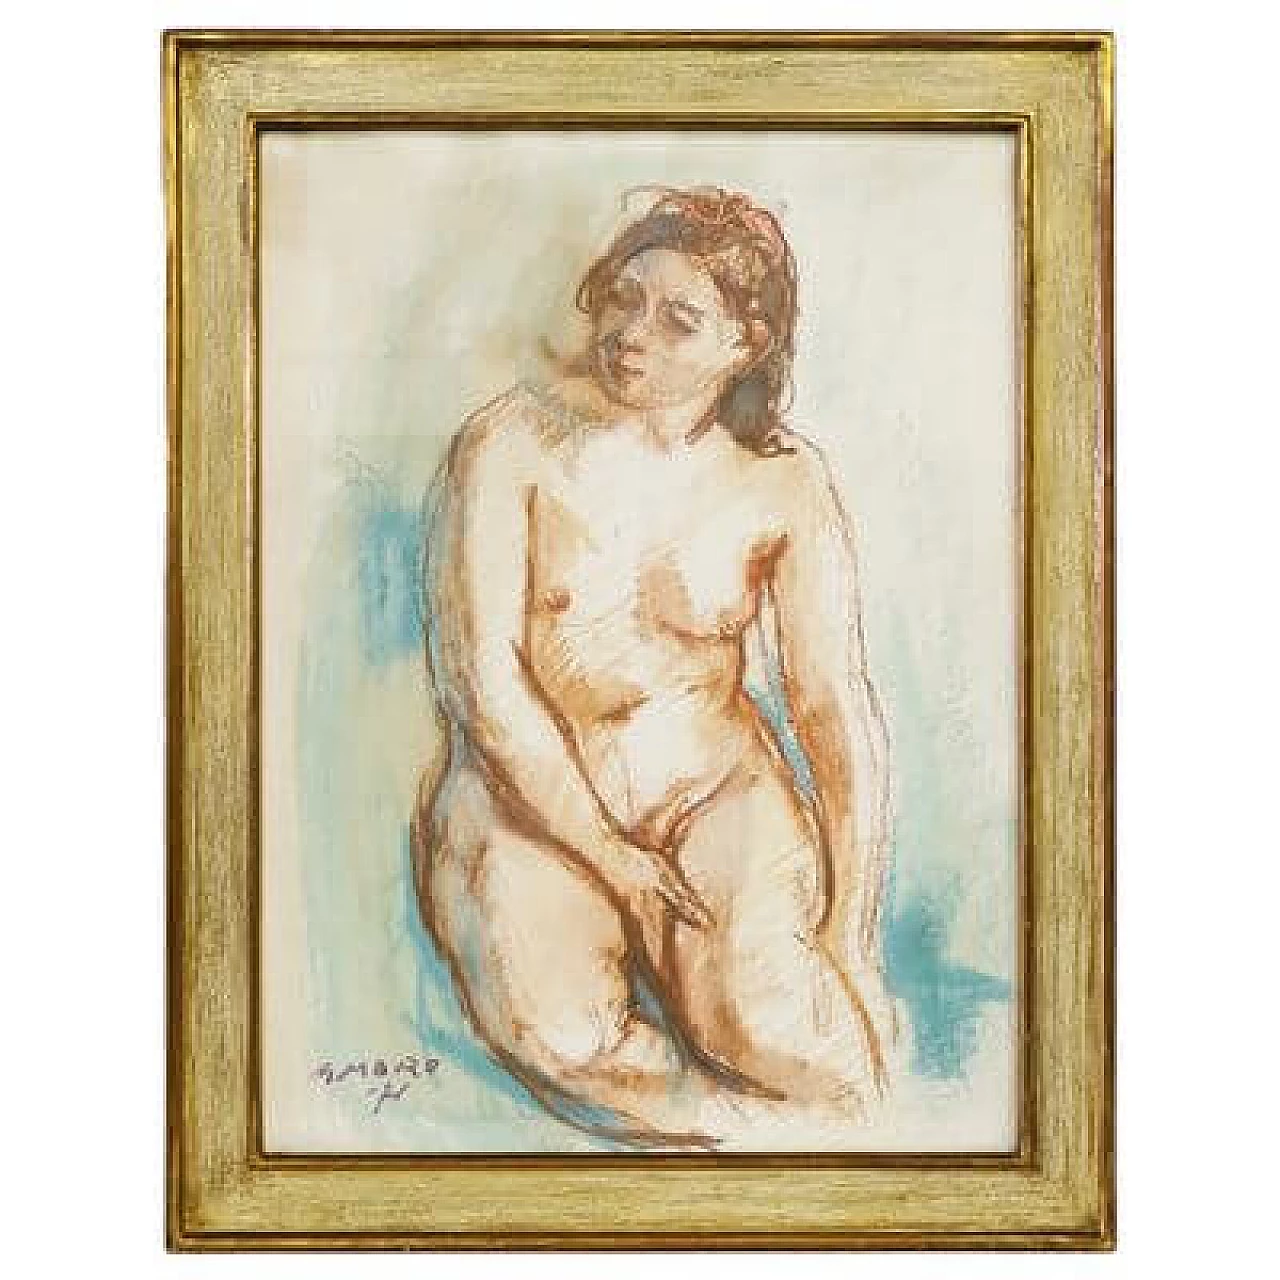 Moro, seated female nude, pastel drawing on cardboard, 1971 2